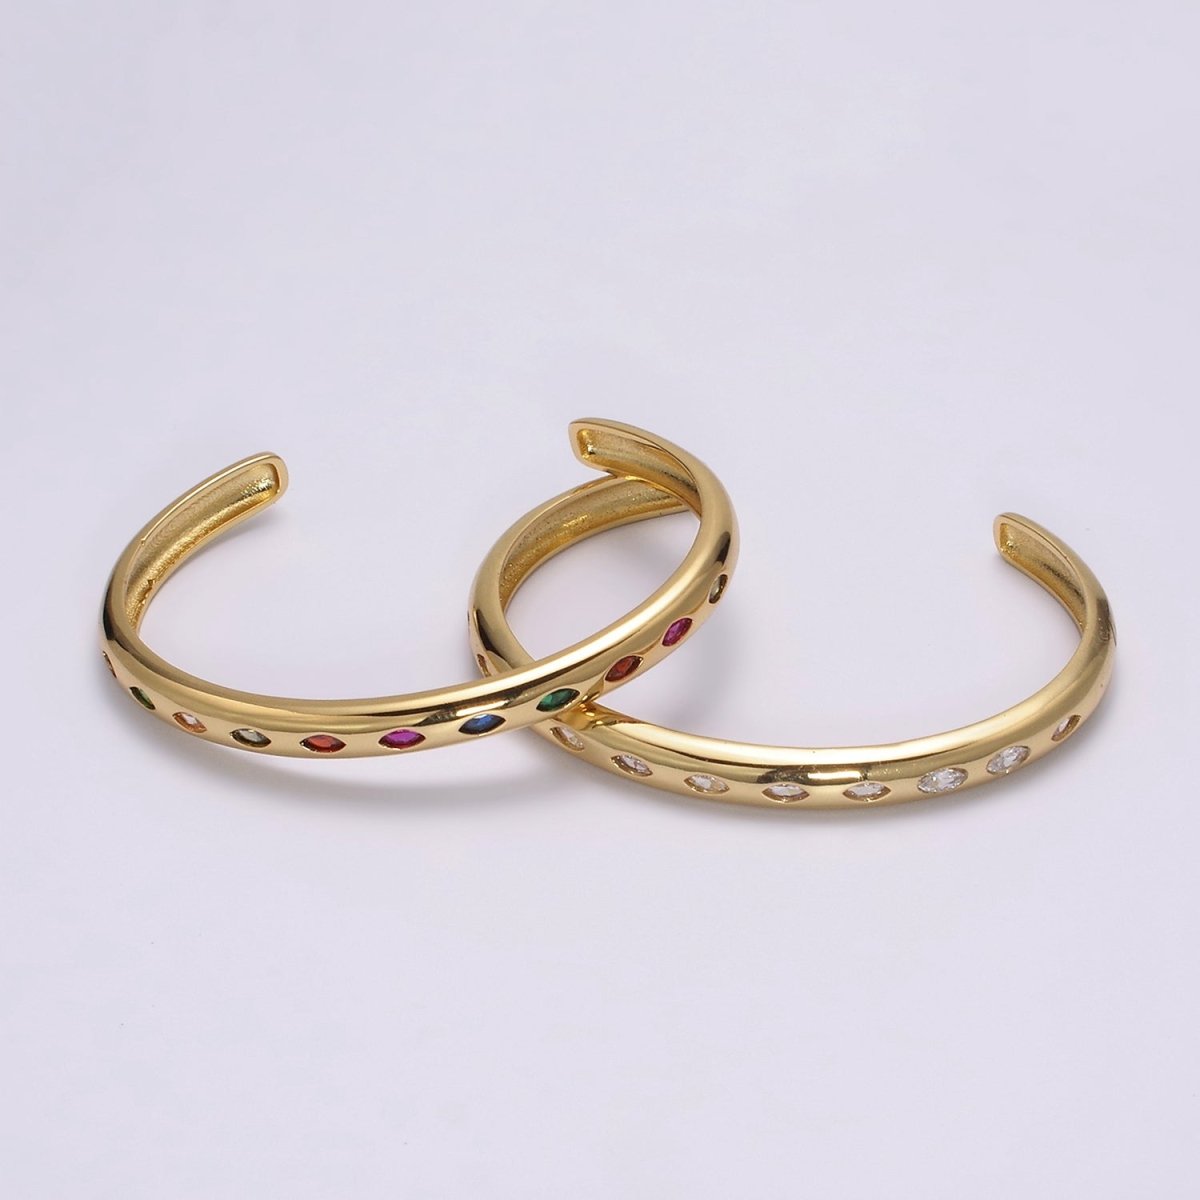 Dainty Gold Color Cz Cuff Bracelet Minimalist Bangle For Stacking Jewelry | WA-298 to WA-301 WA-430 Clearance Pricing - DLUXCA